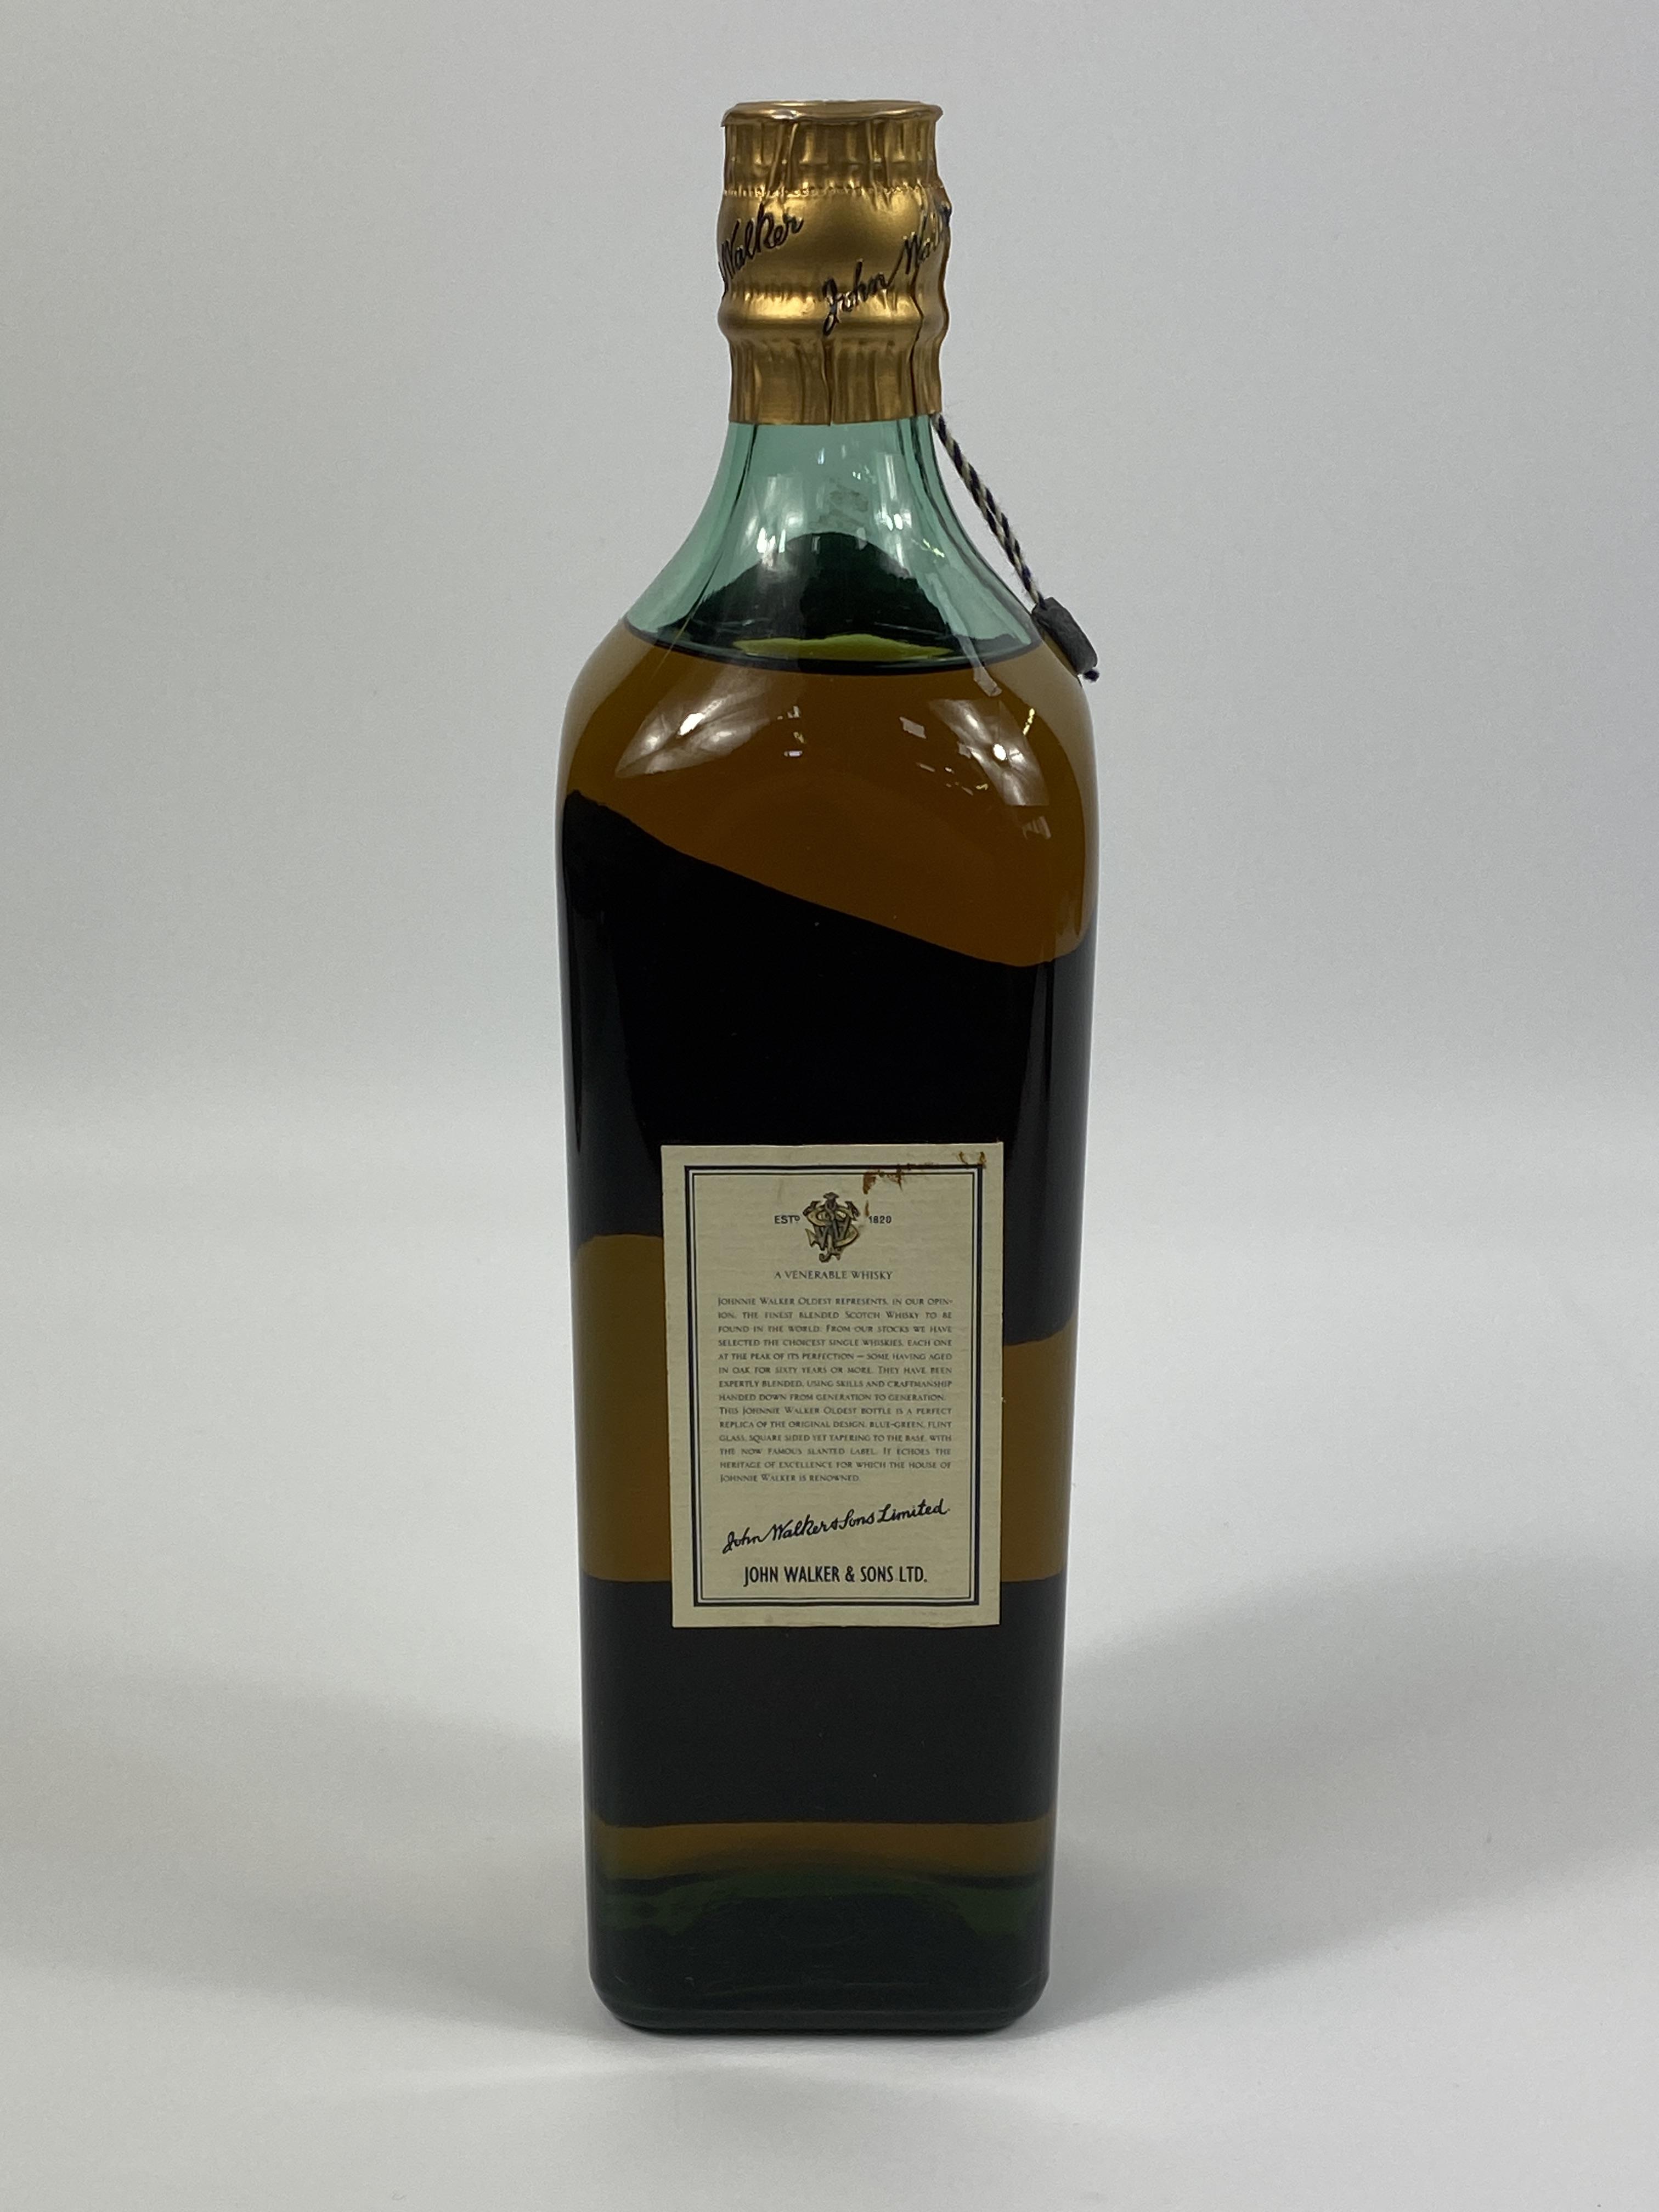 75cl bottle of Johnnie Walker Oldest Scotch whisky; bottle of Johnnie Walker Black Label - Image 5 of 5